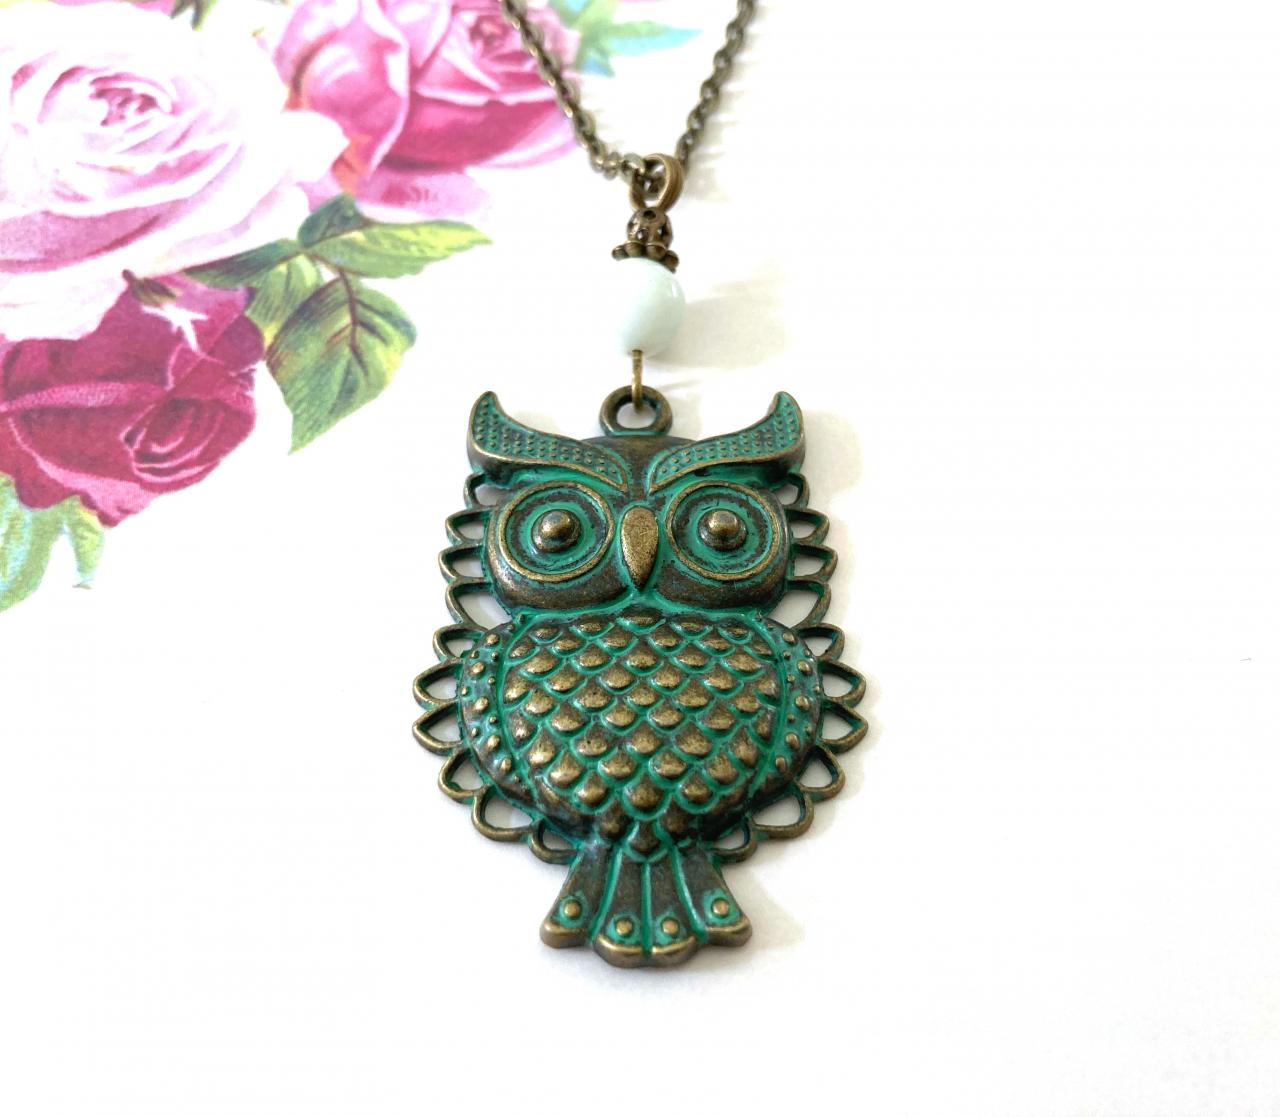 Owl Necklace With A Jade Pearl, Selma Dreams